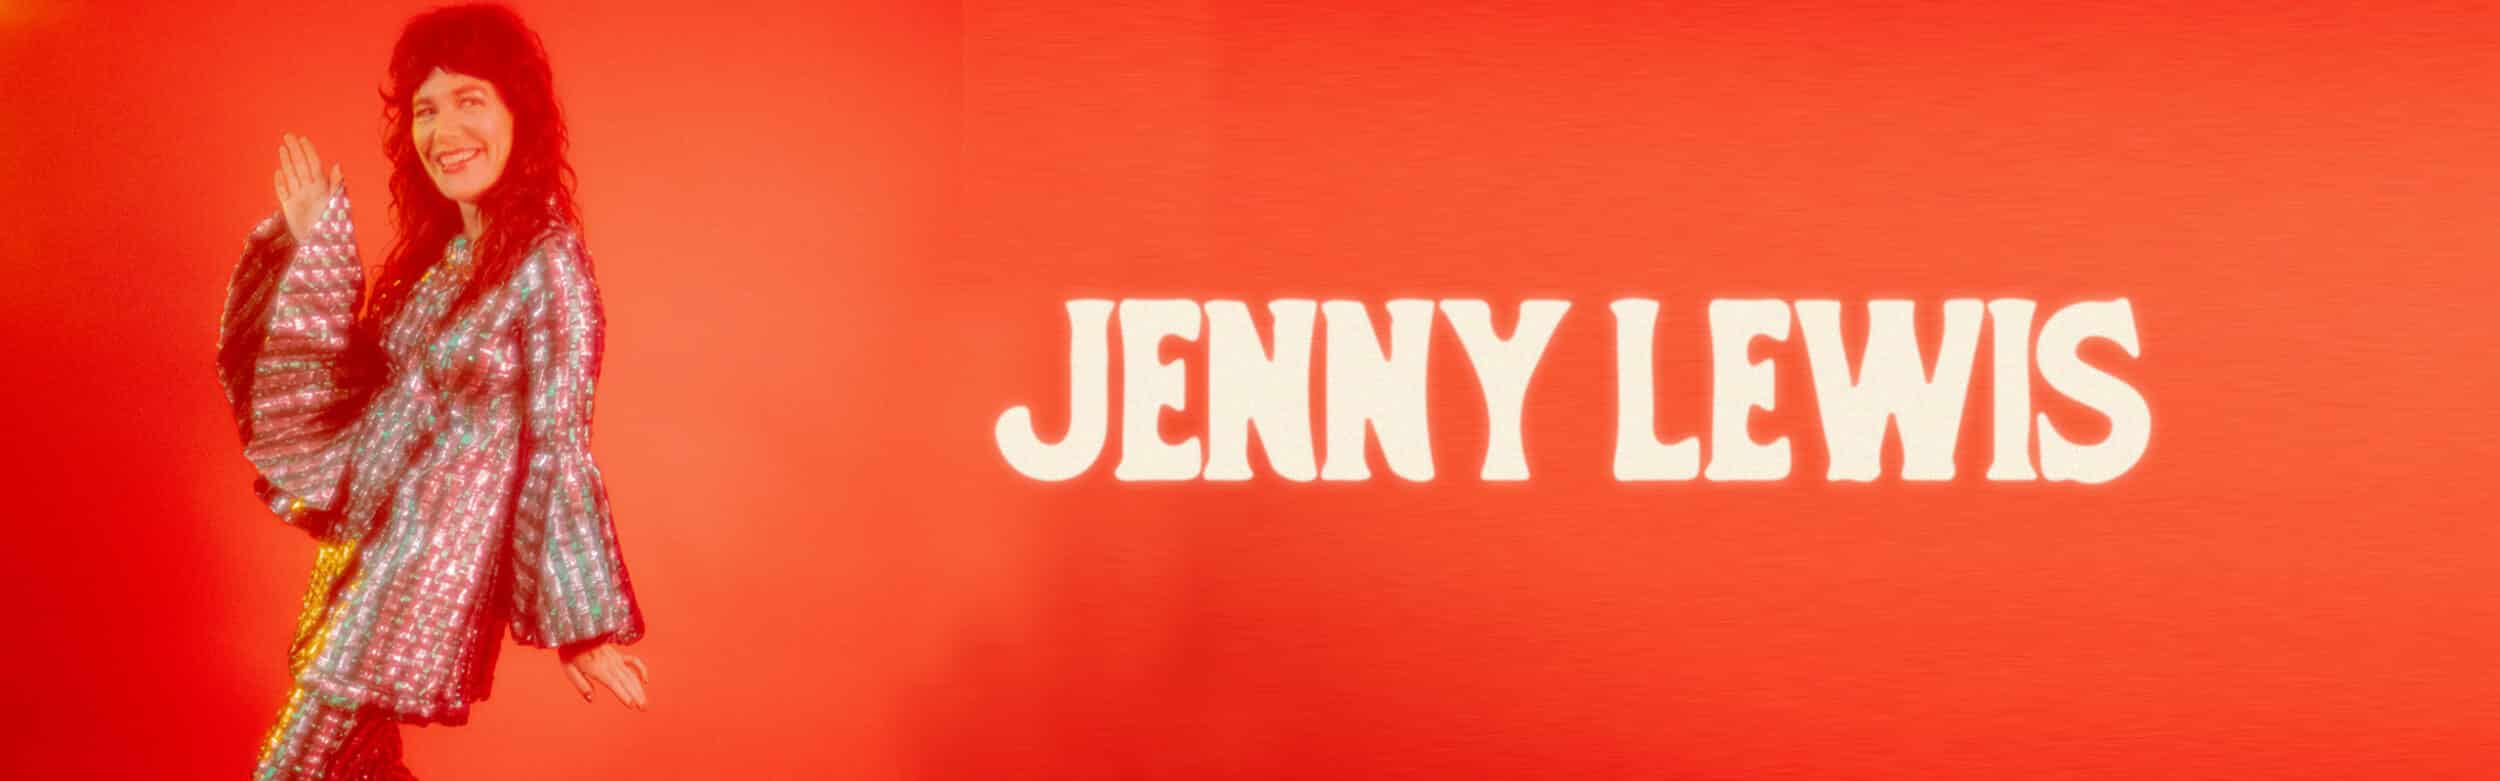 Jenny Lewis – JOY’ALL TOUR